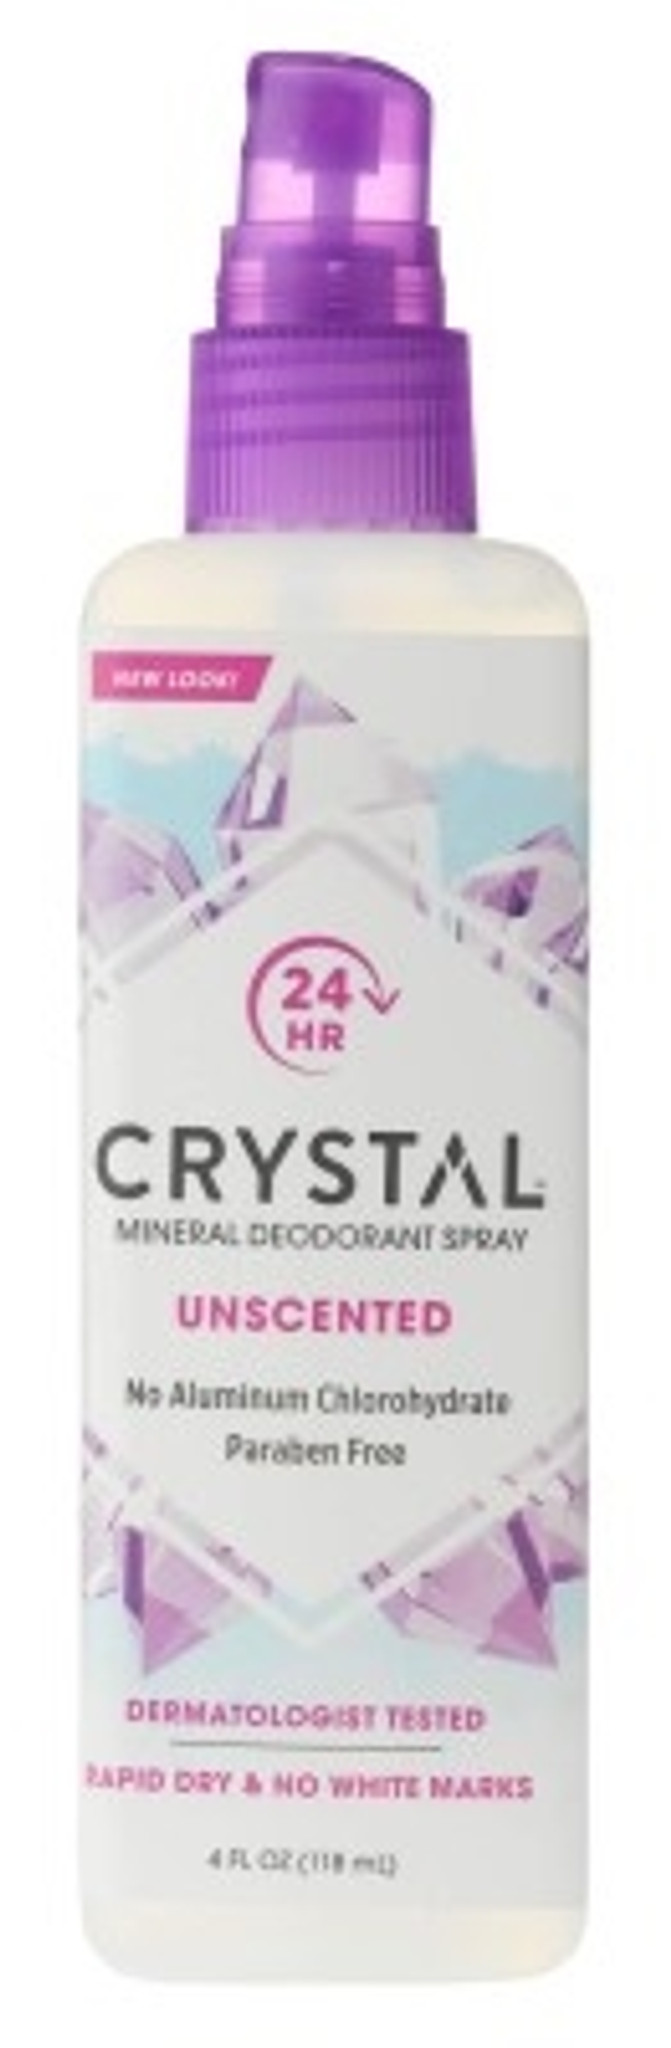 BL Crystal Deodorant Spray 4oz Unscented 24 Hour - Pack of 3 -  drugsupplystore.com